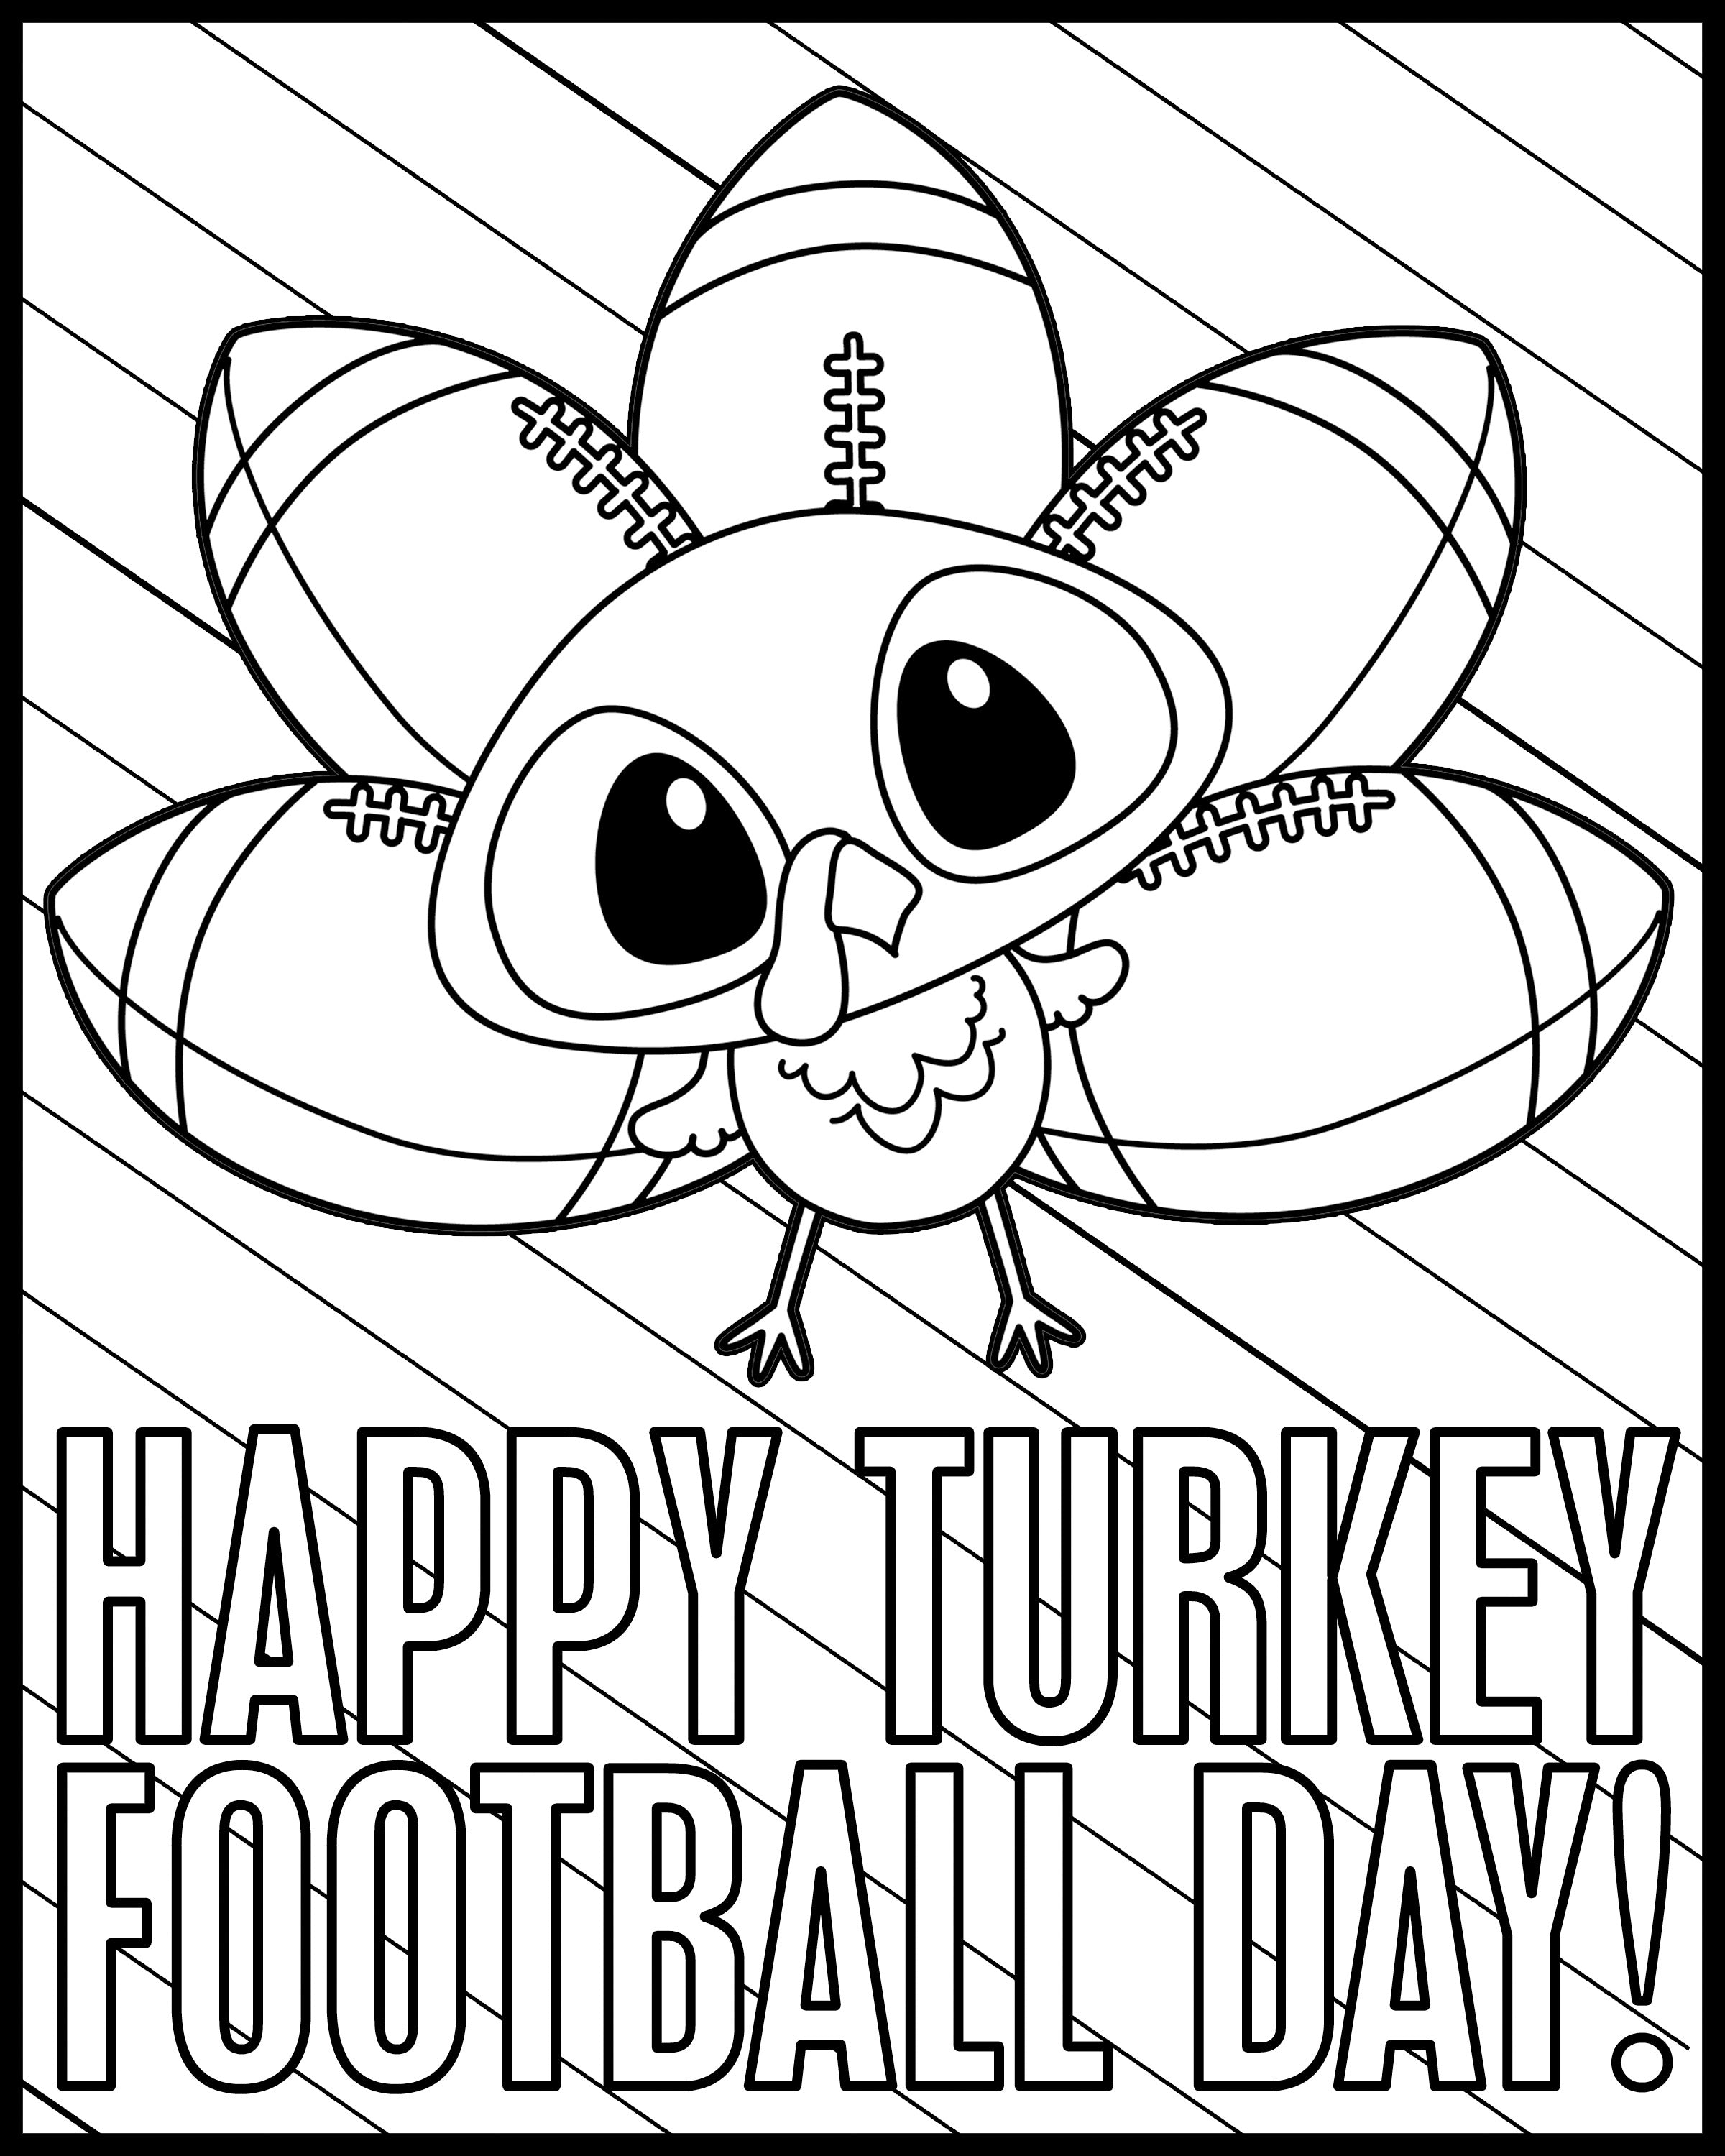 Turkey football coloring page â dorky doodles